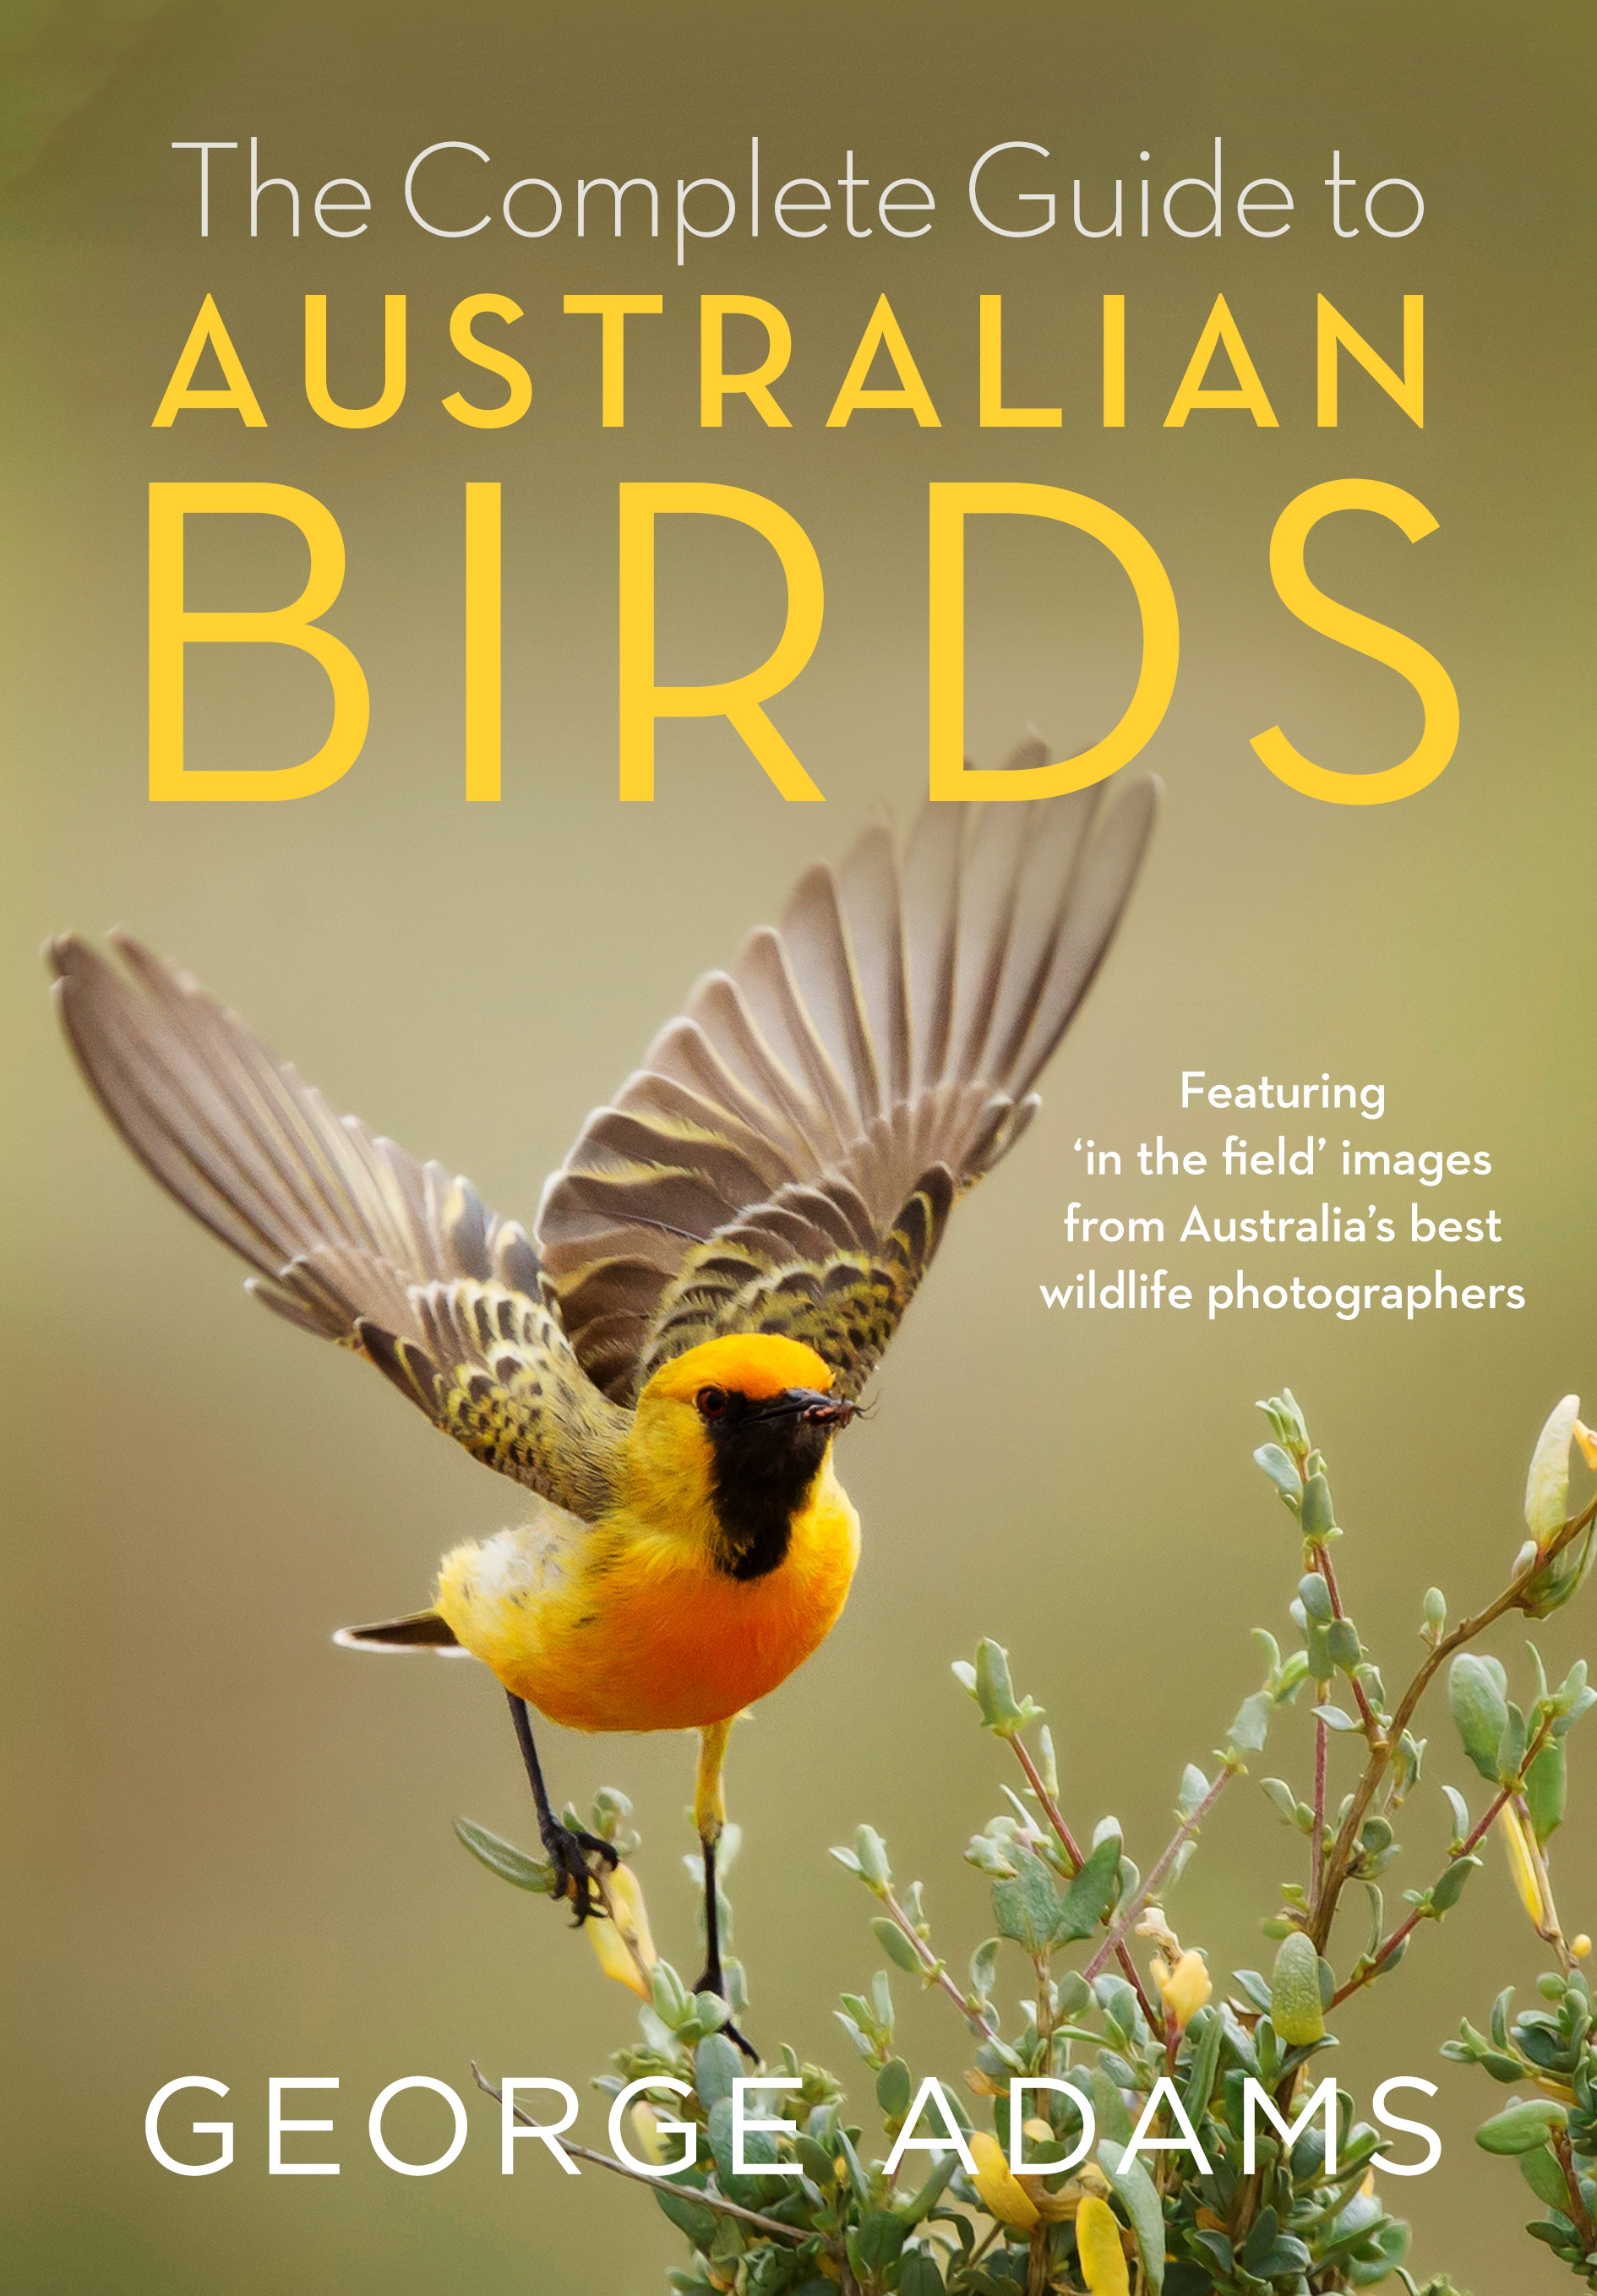 gård tidligere kylling Complete Guide to Australian Birds by George Adams - Penguin Books Australia